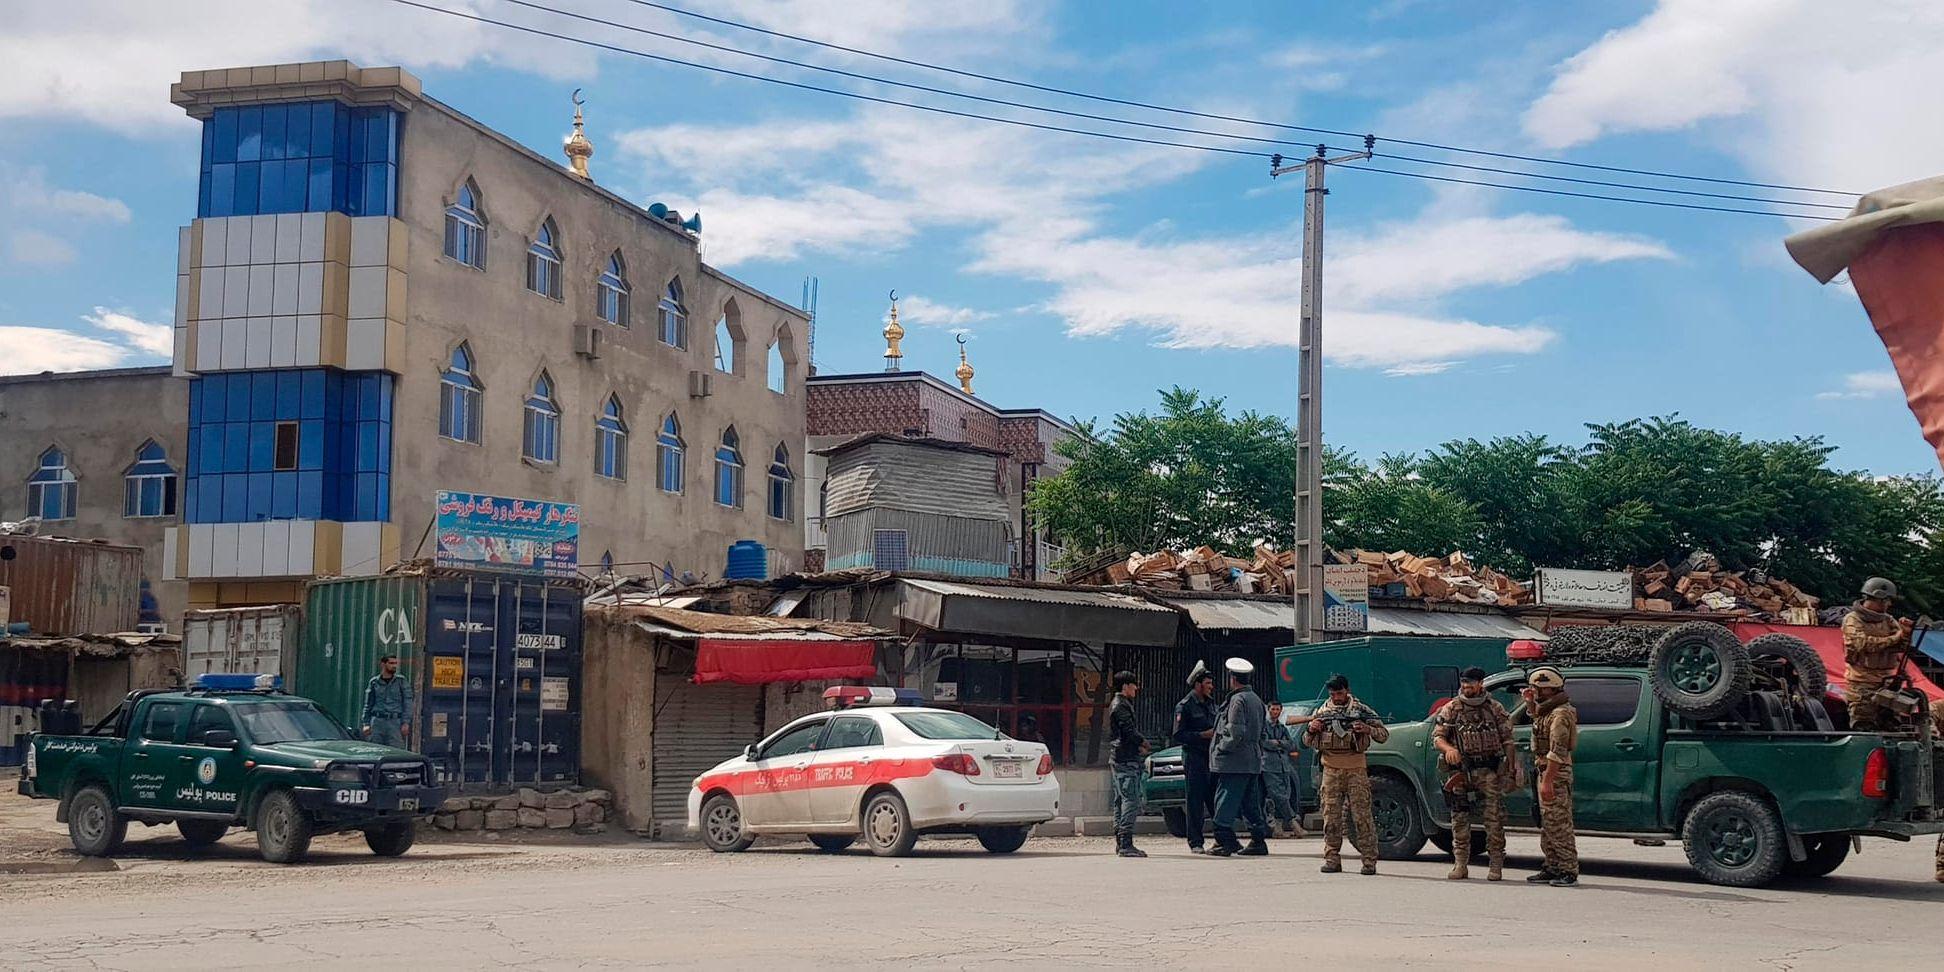 Bombdådet skedde vid al-Taqwamoskén i Afghanistans huvudstad Kabul.